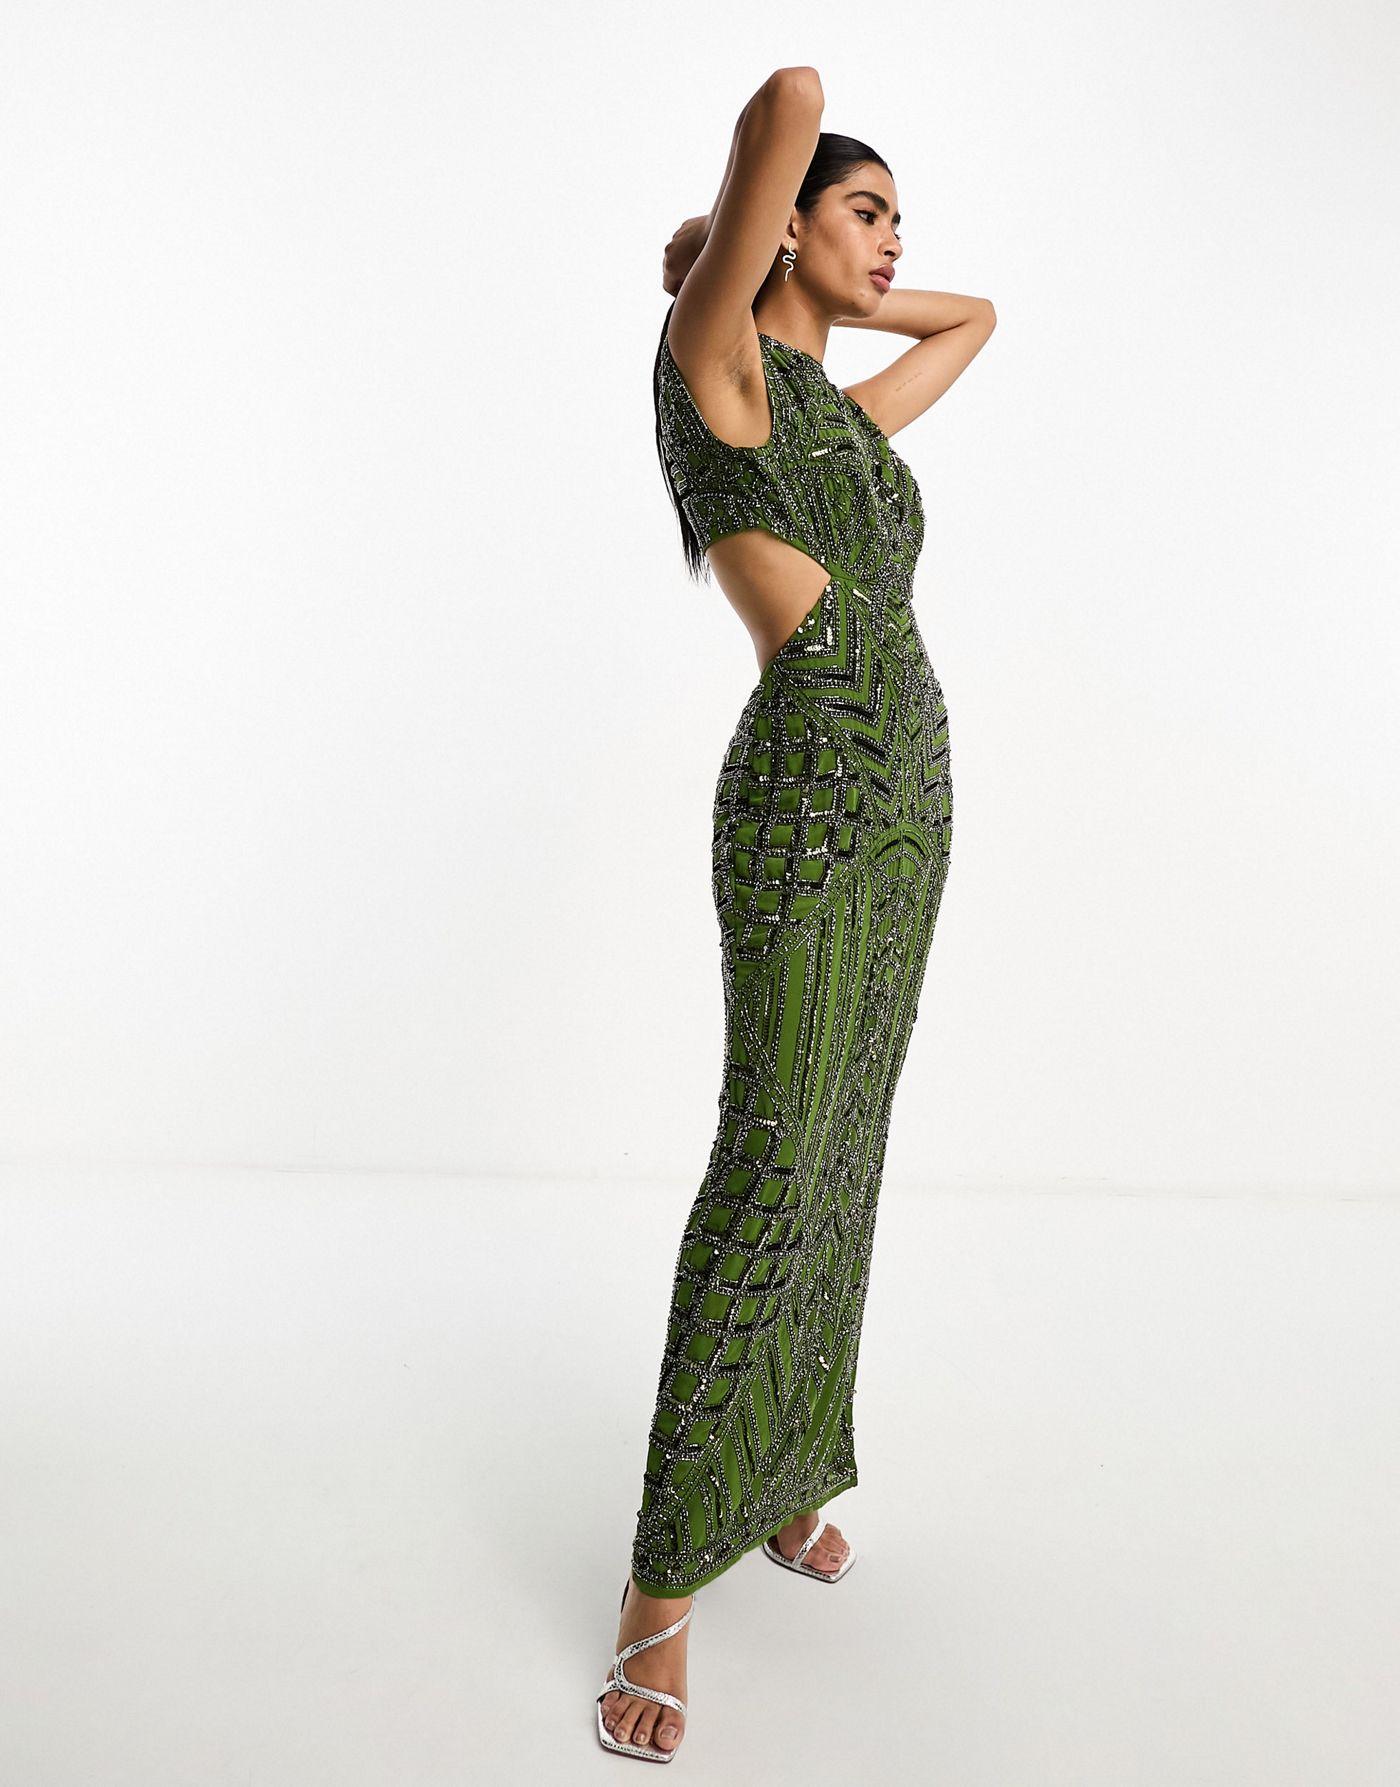 ASOS DESIGN embellished high neck cut out waist maxi dress in green